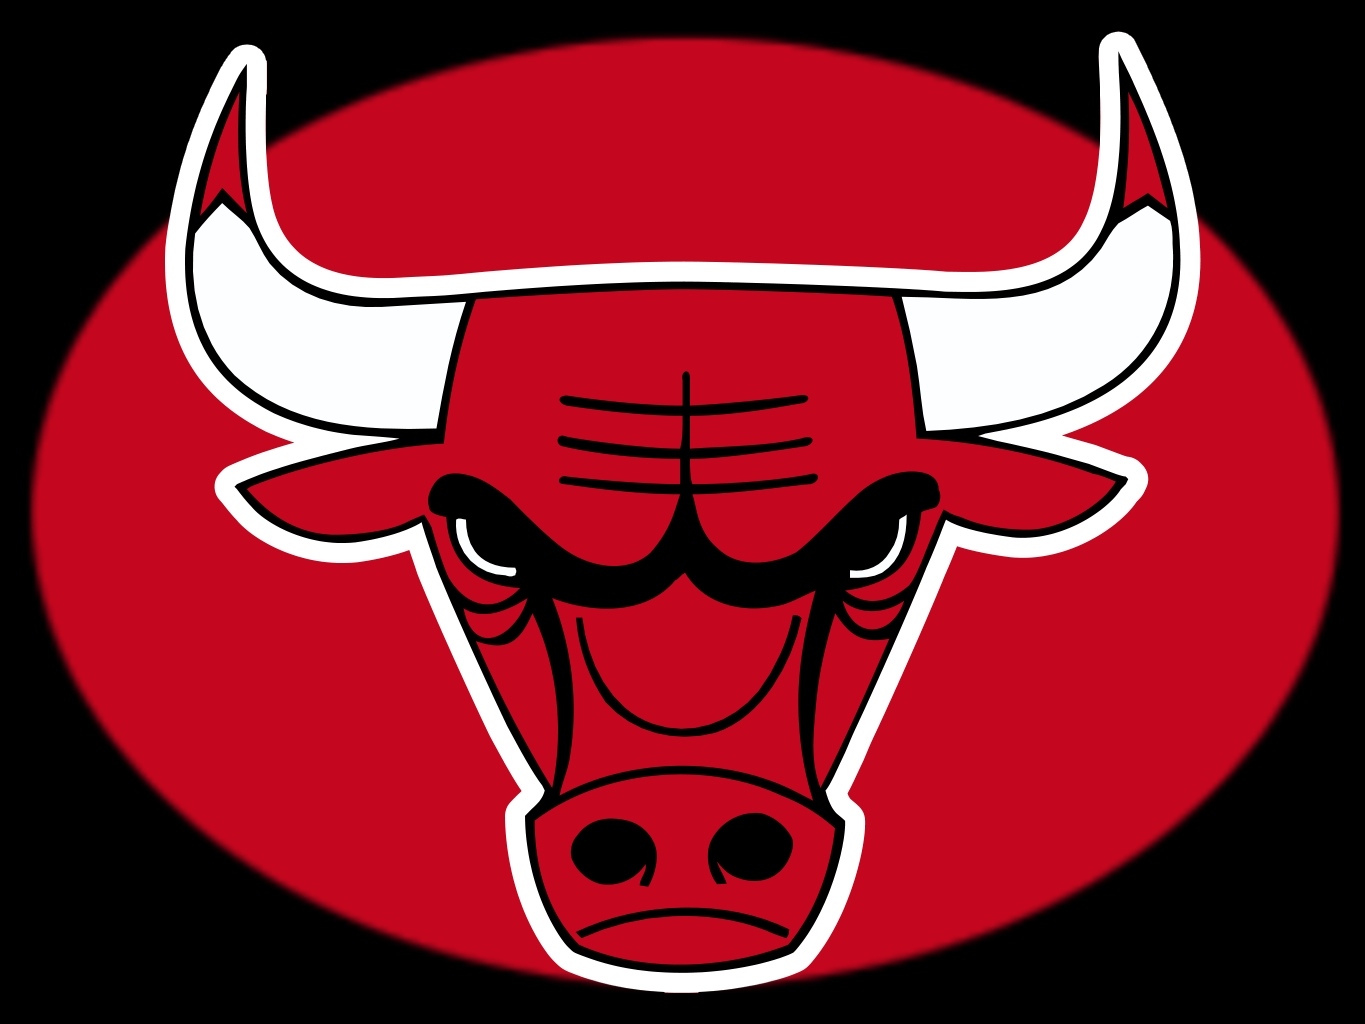 NBA Betting: SportsTips’ Preseason Betting Preview on the Chicago Bulls